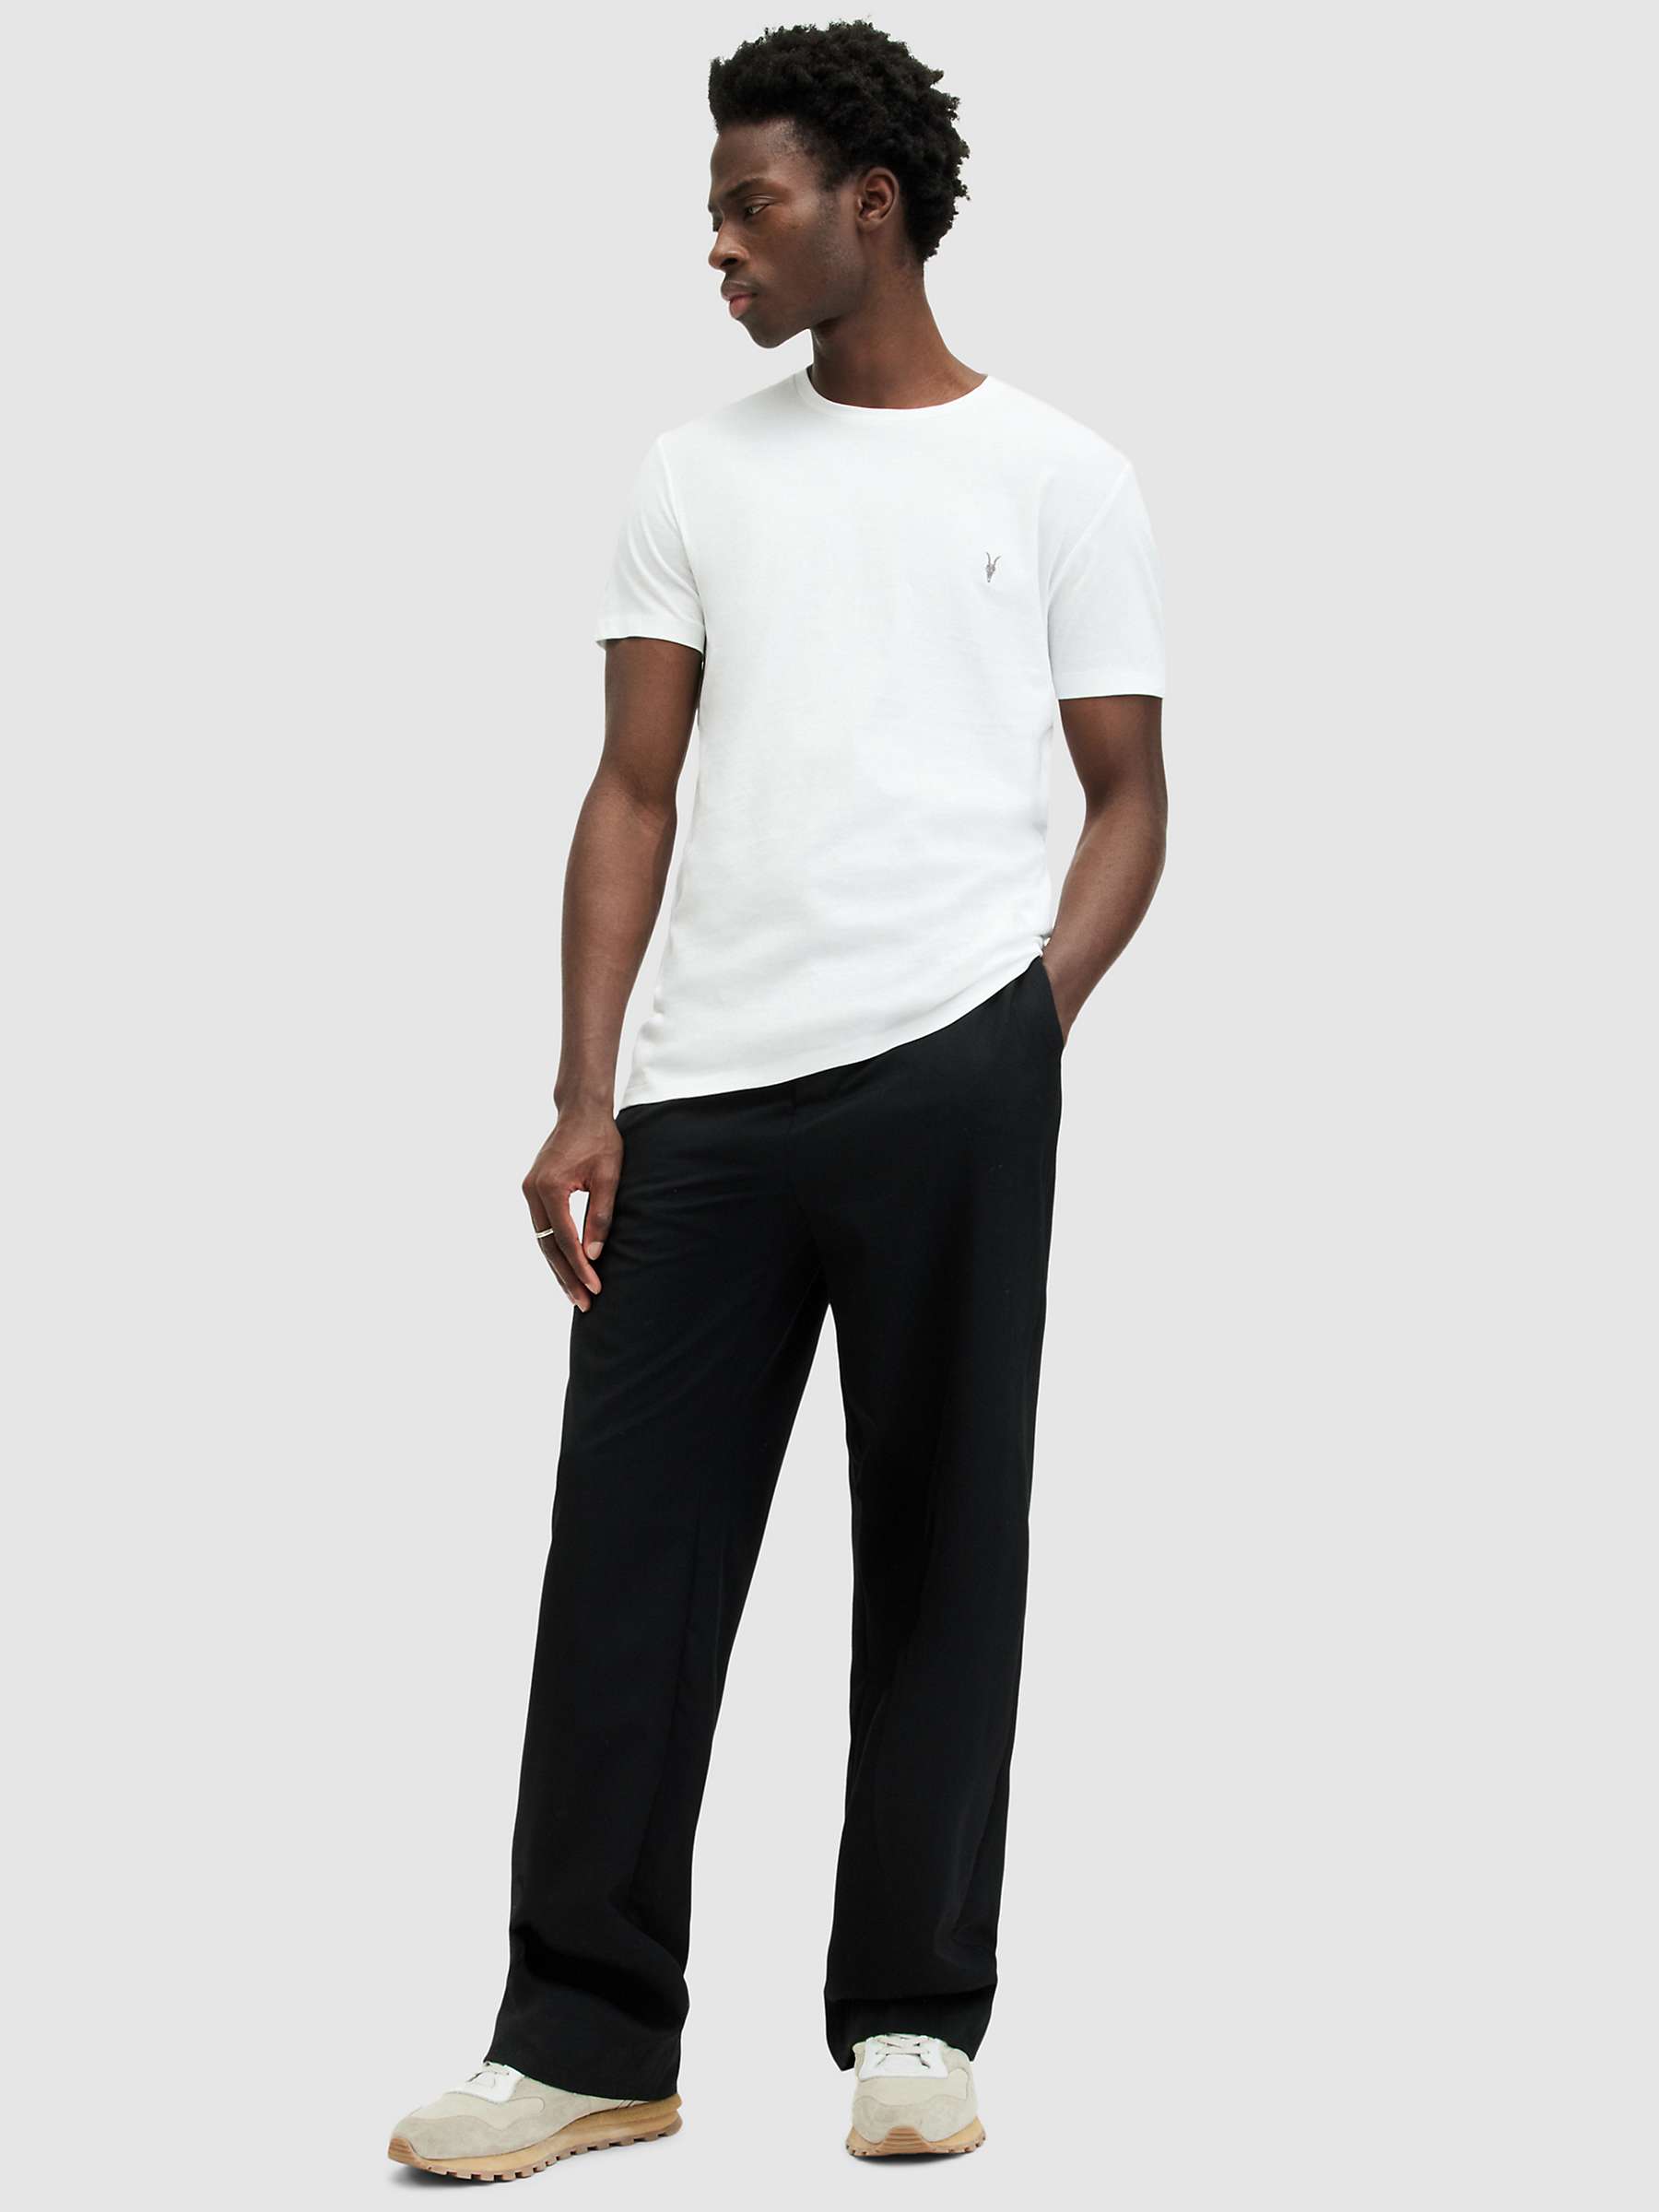 Buy AllSaints Tonic T-Shirt, Pack of 3, Multi Online at johnlewis.com